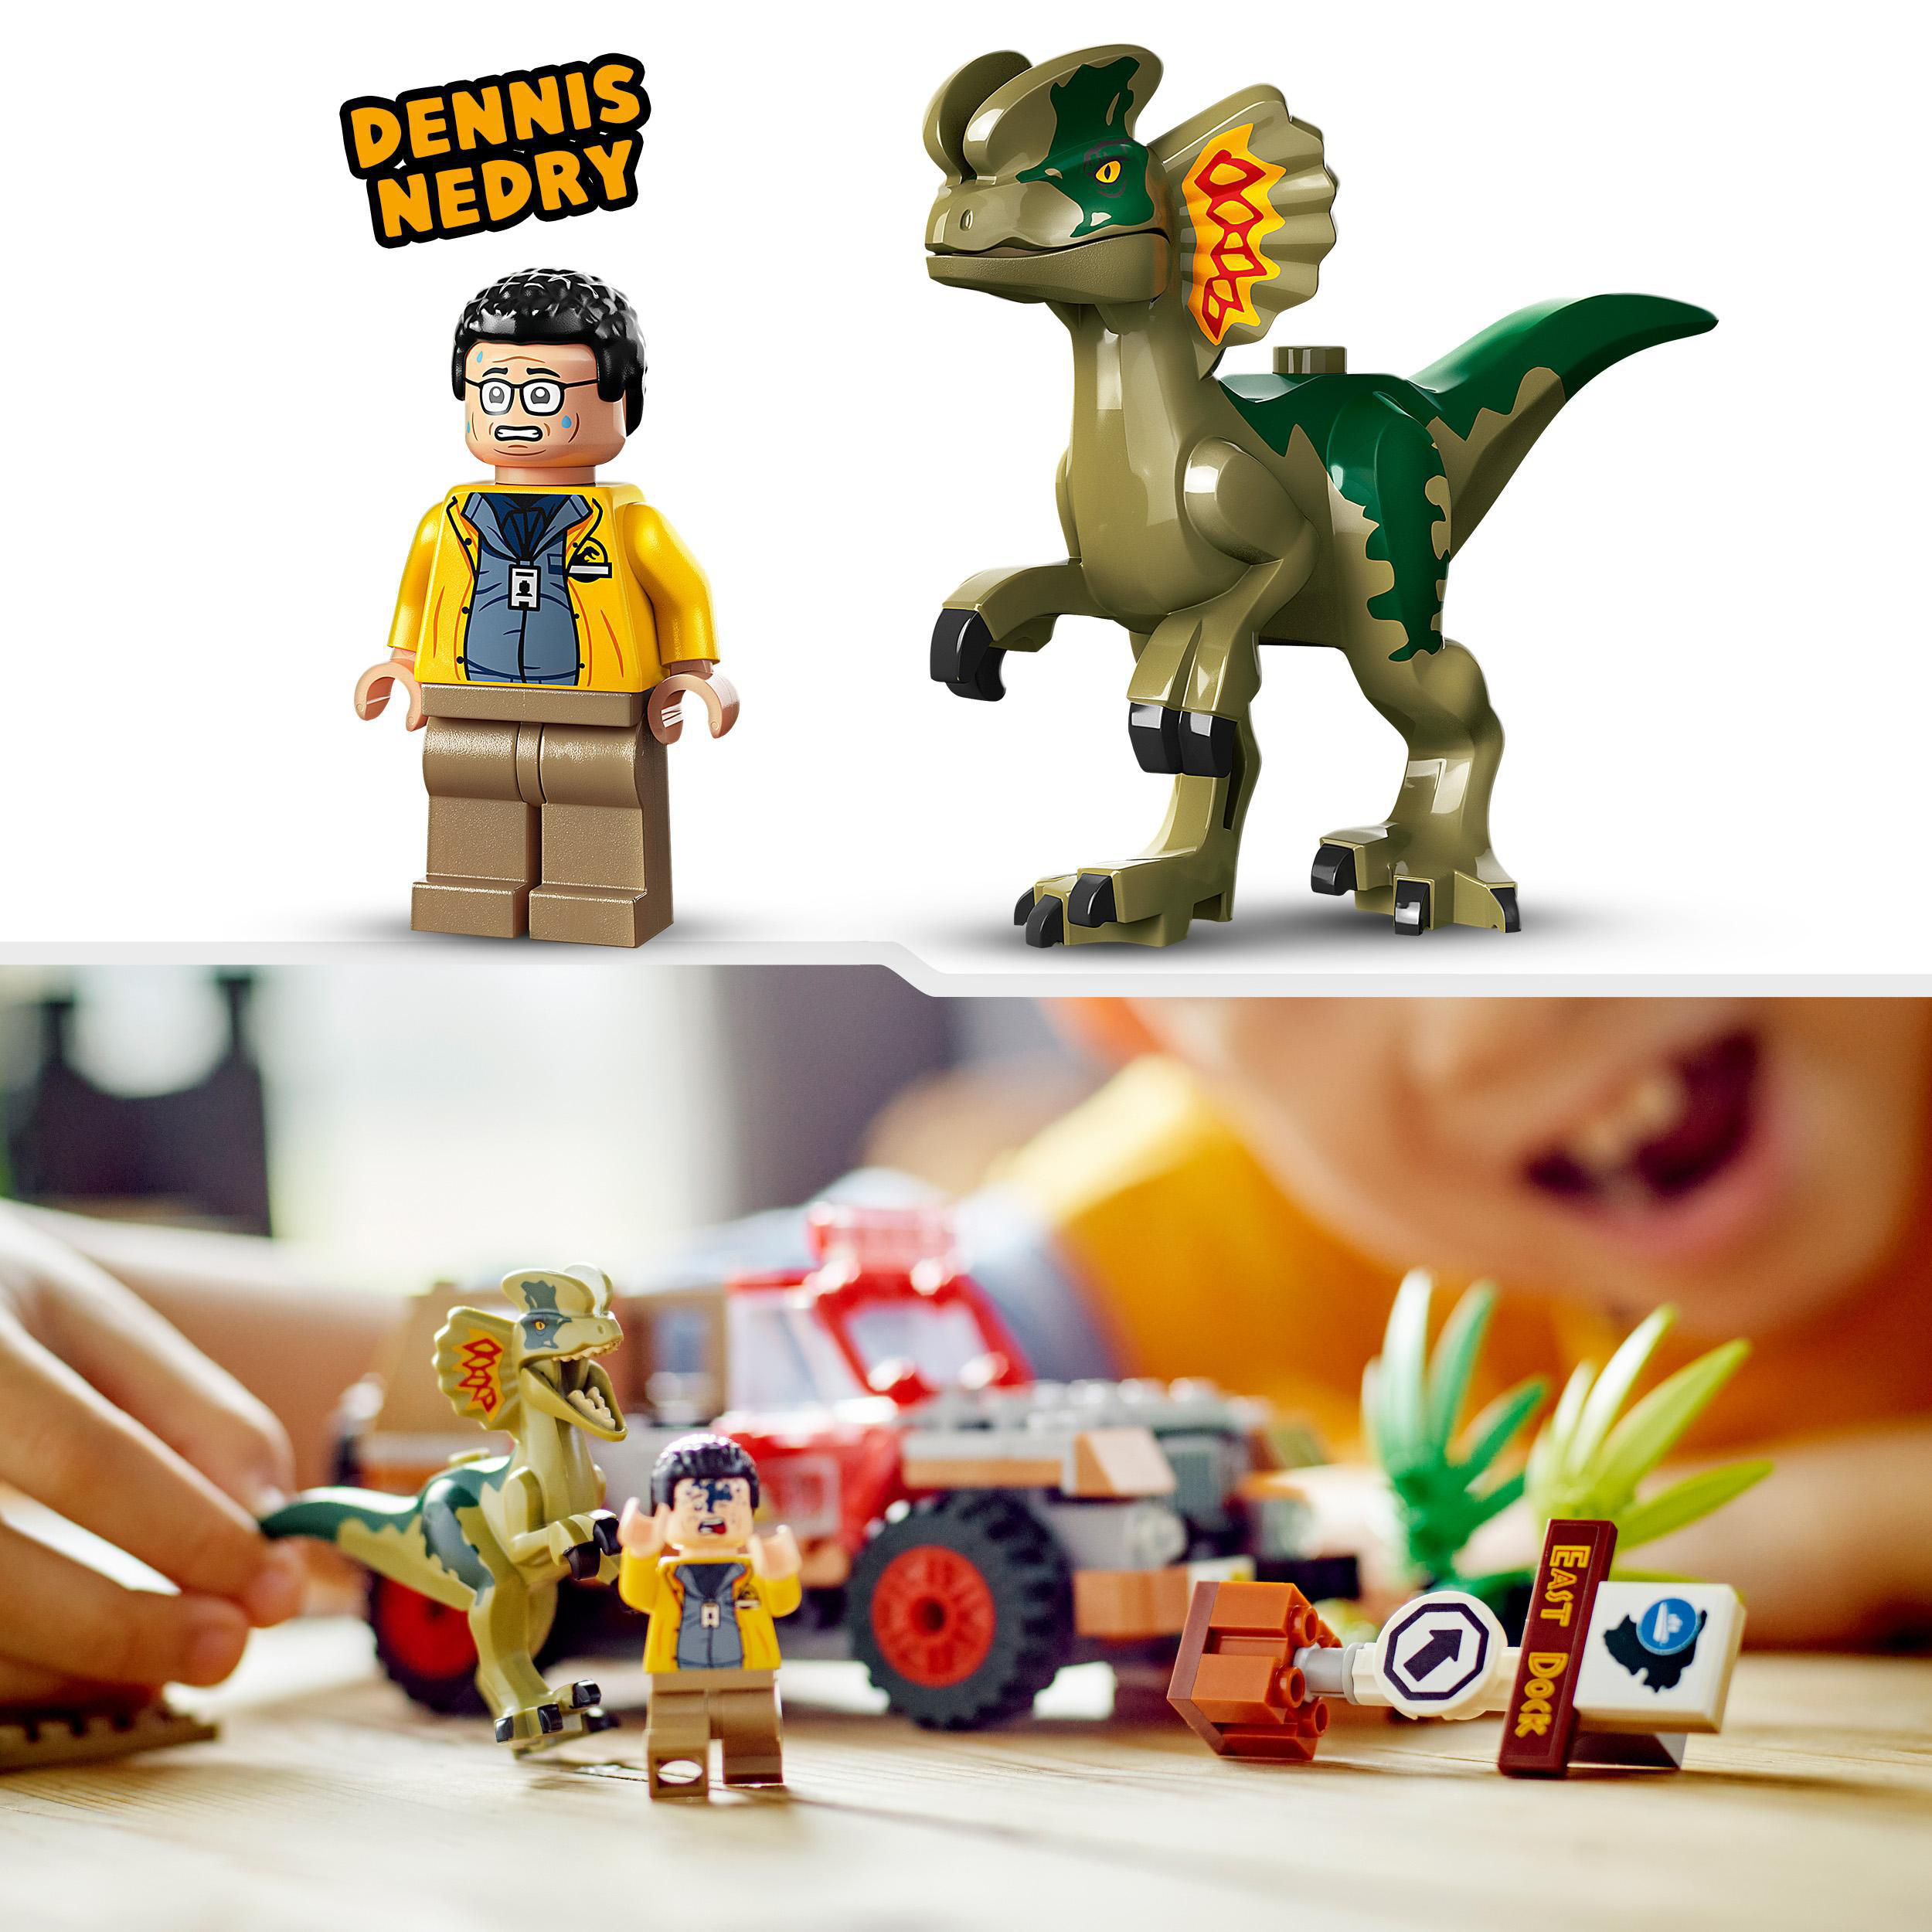 76958 Dilophosaurus Jurassic Park Mehrfarbig des Hinterhalt Bausatz, LEGO